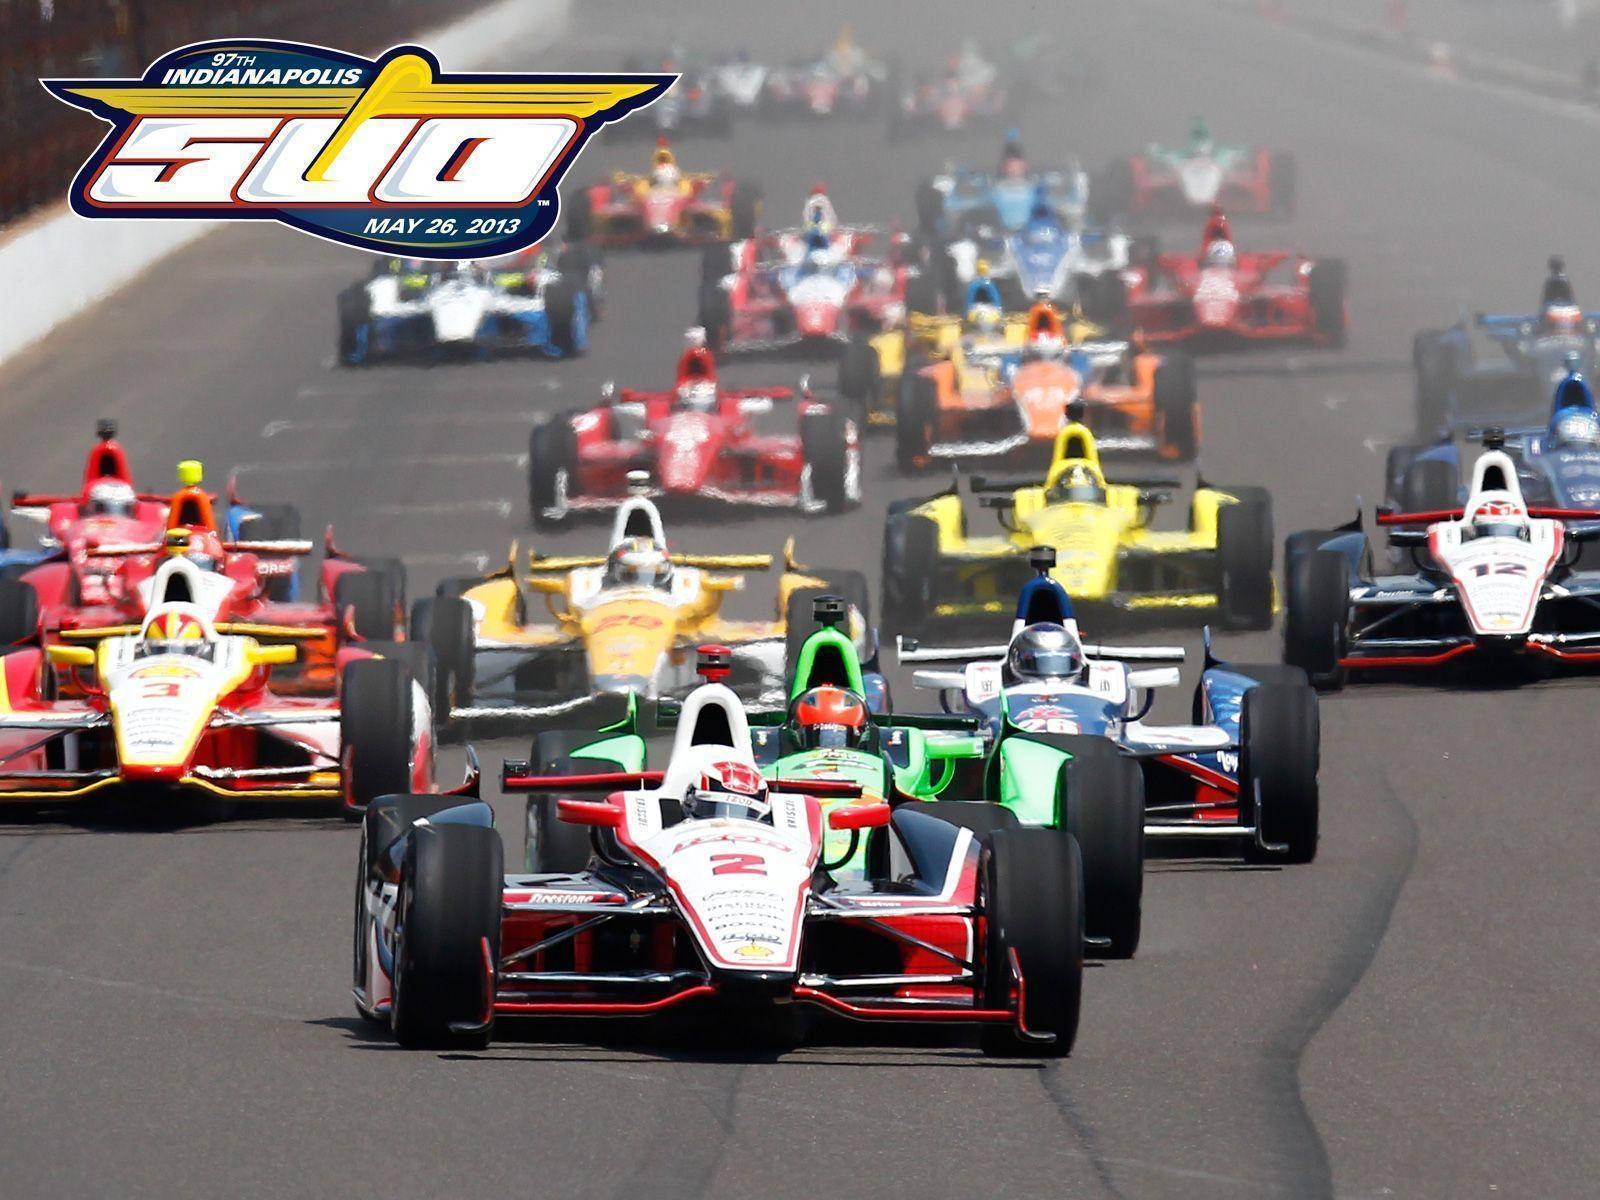 97th Indianapolis 500 Auto Racing Wallpaper